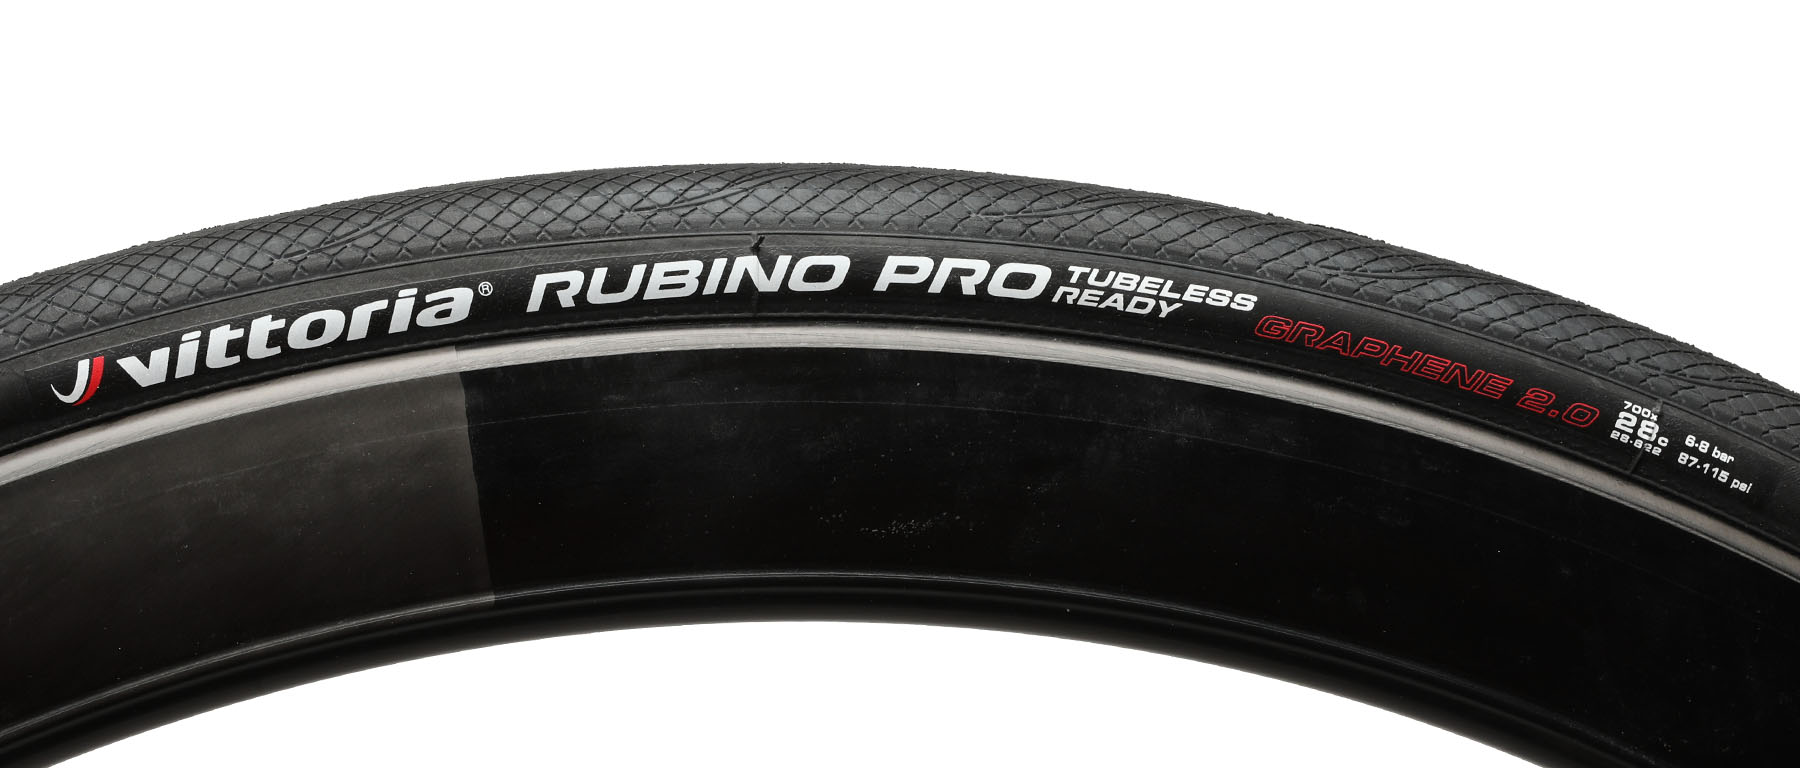 Vittoria Rubino Pro G2.0 Tubeless Road Tire